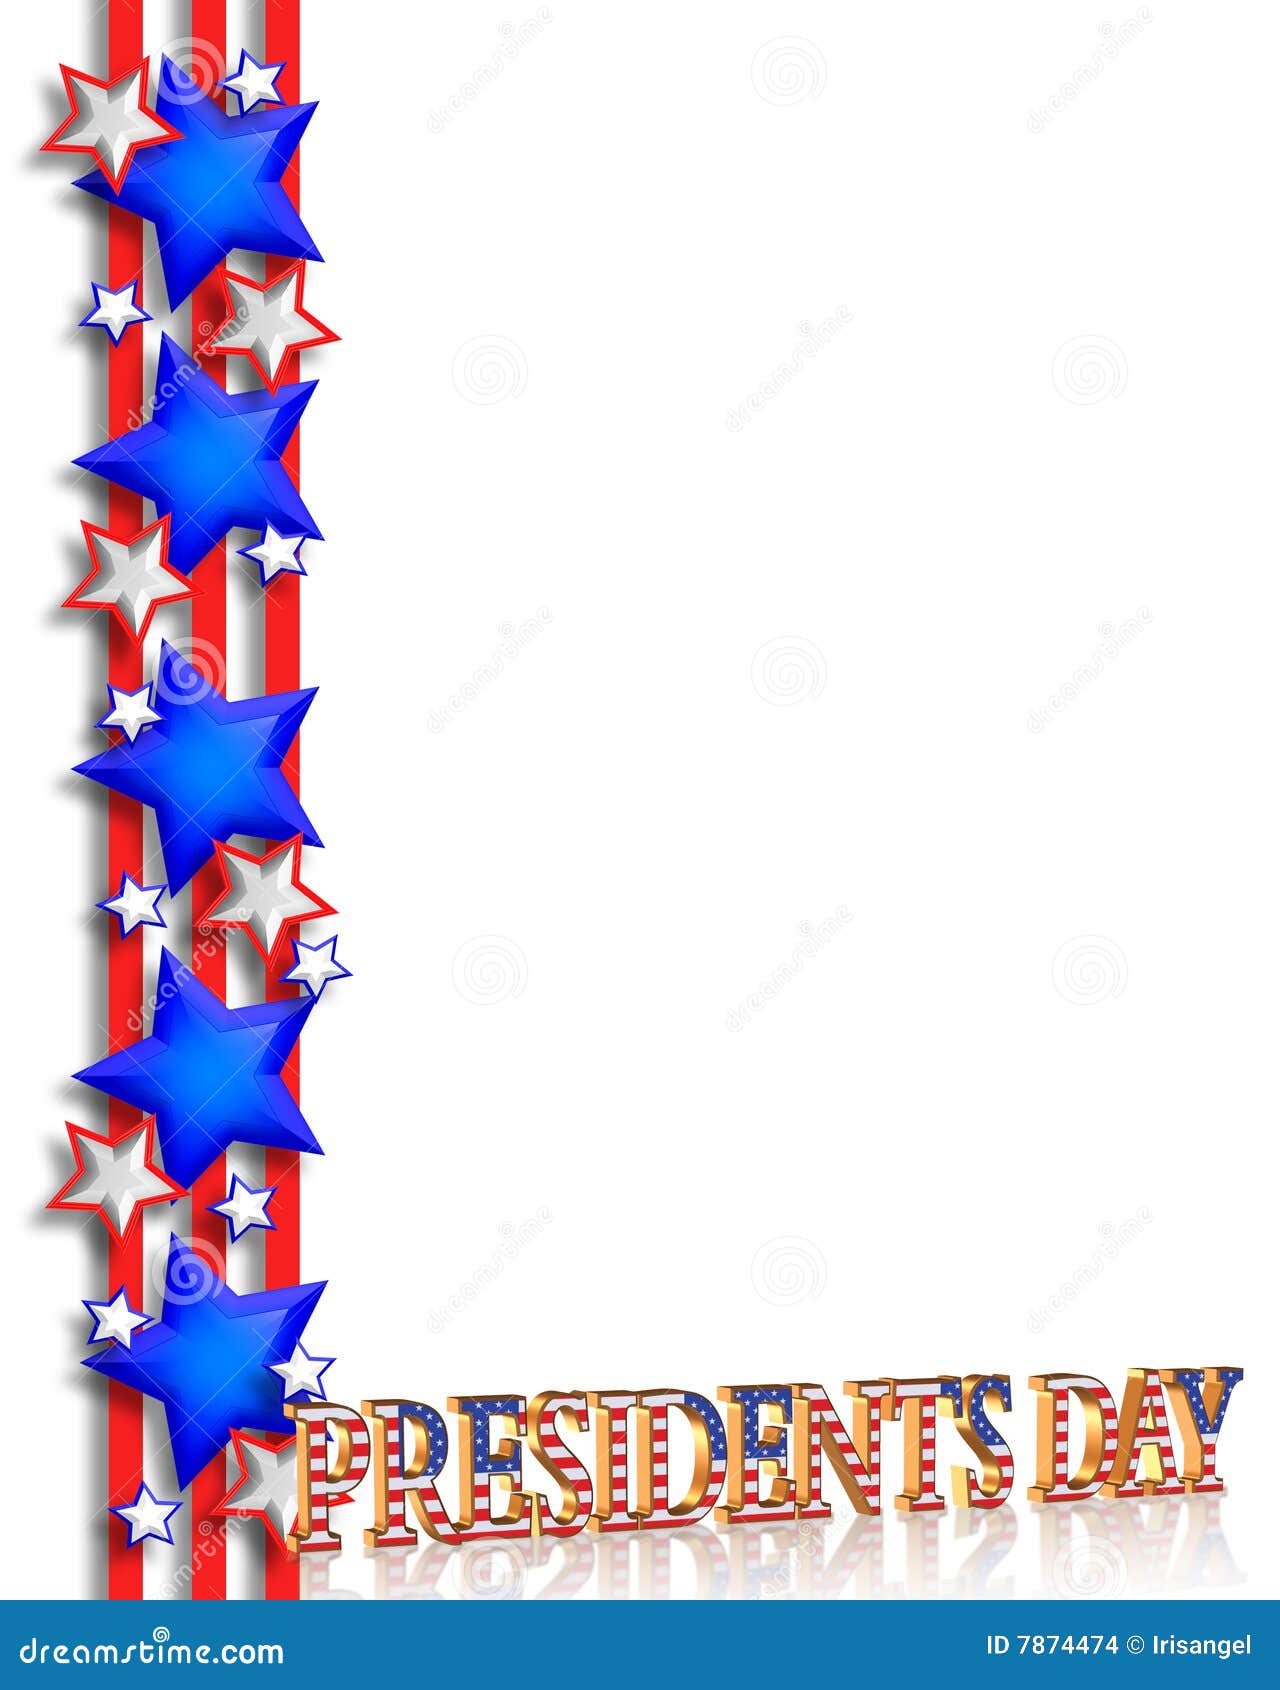 Presidents Day Background Border Stock Images - Image: 7874474